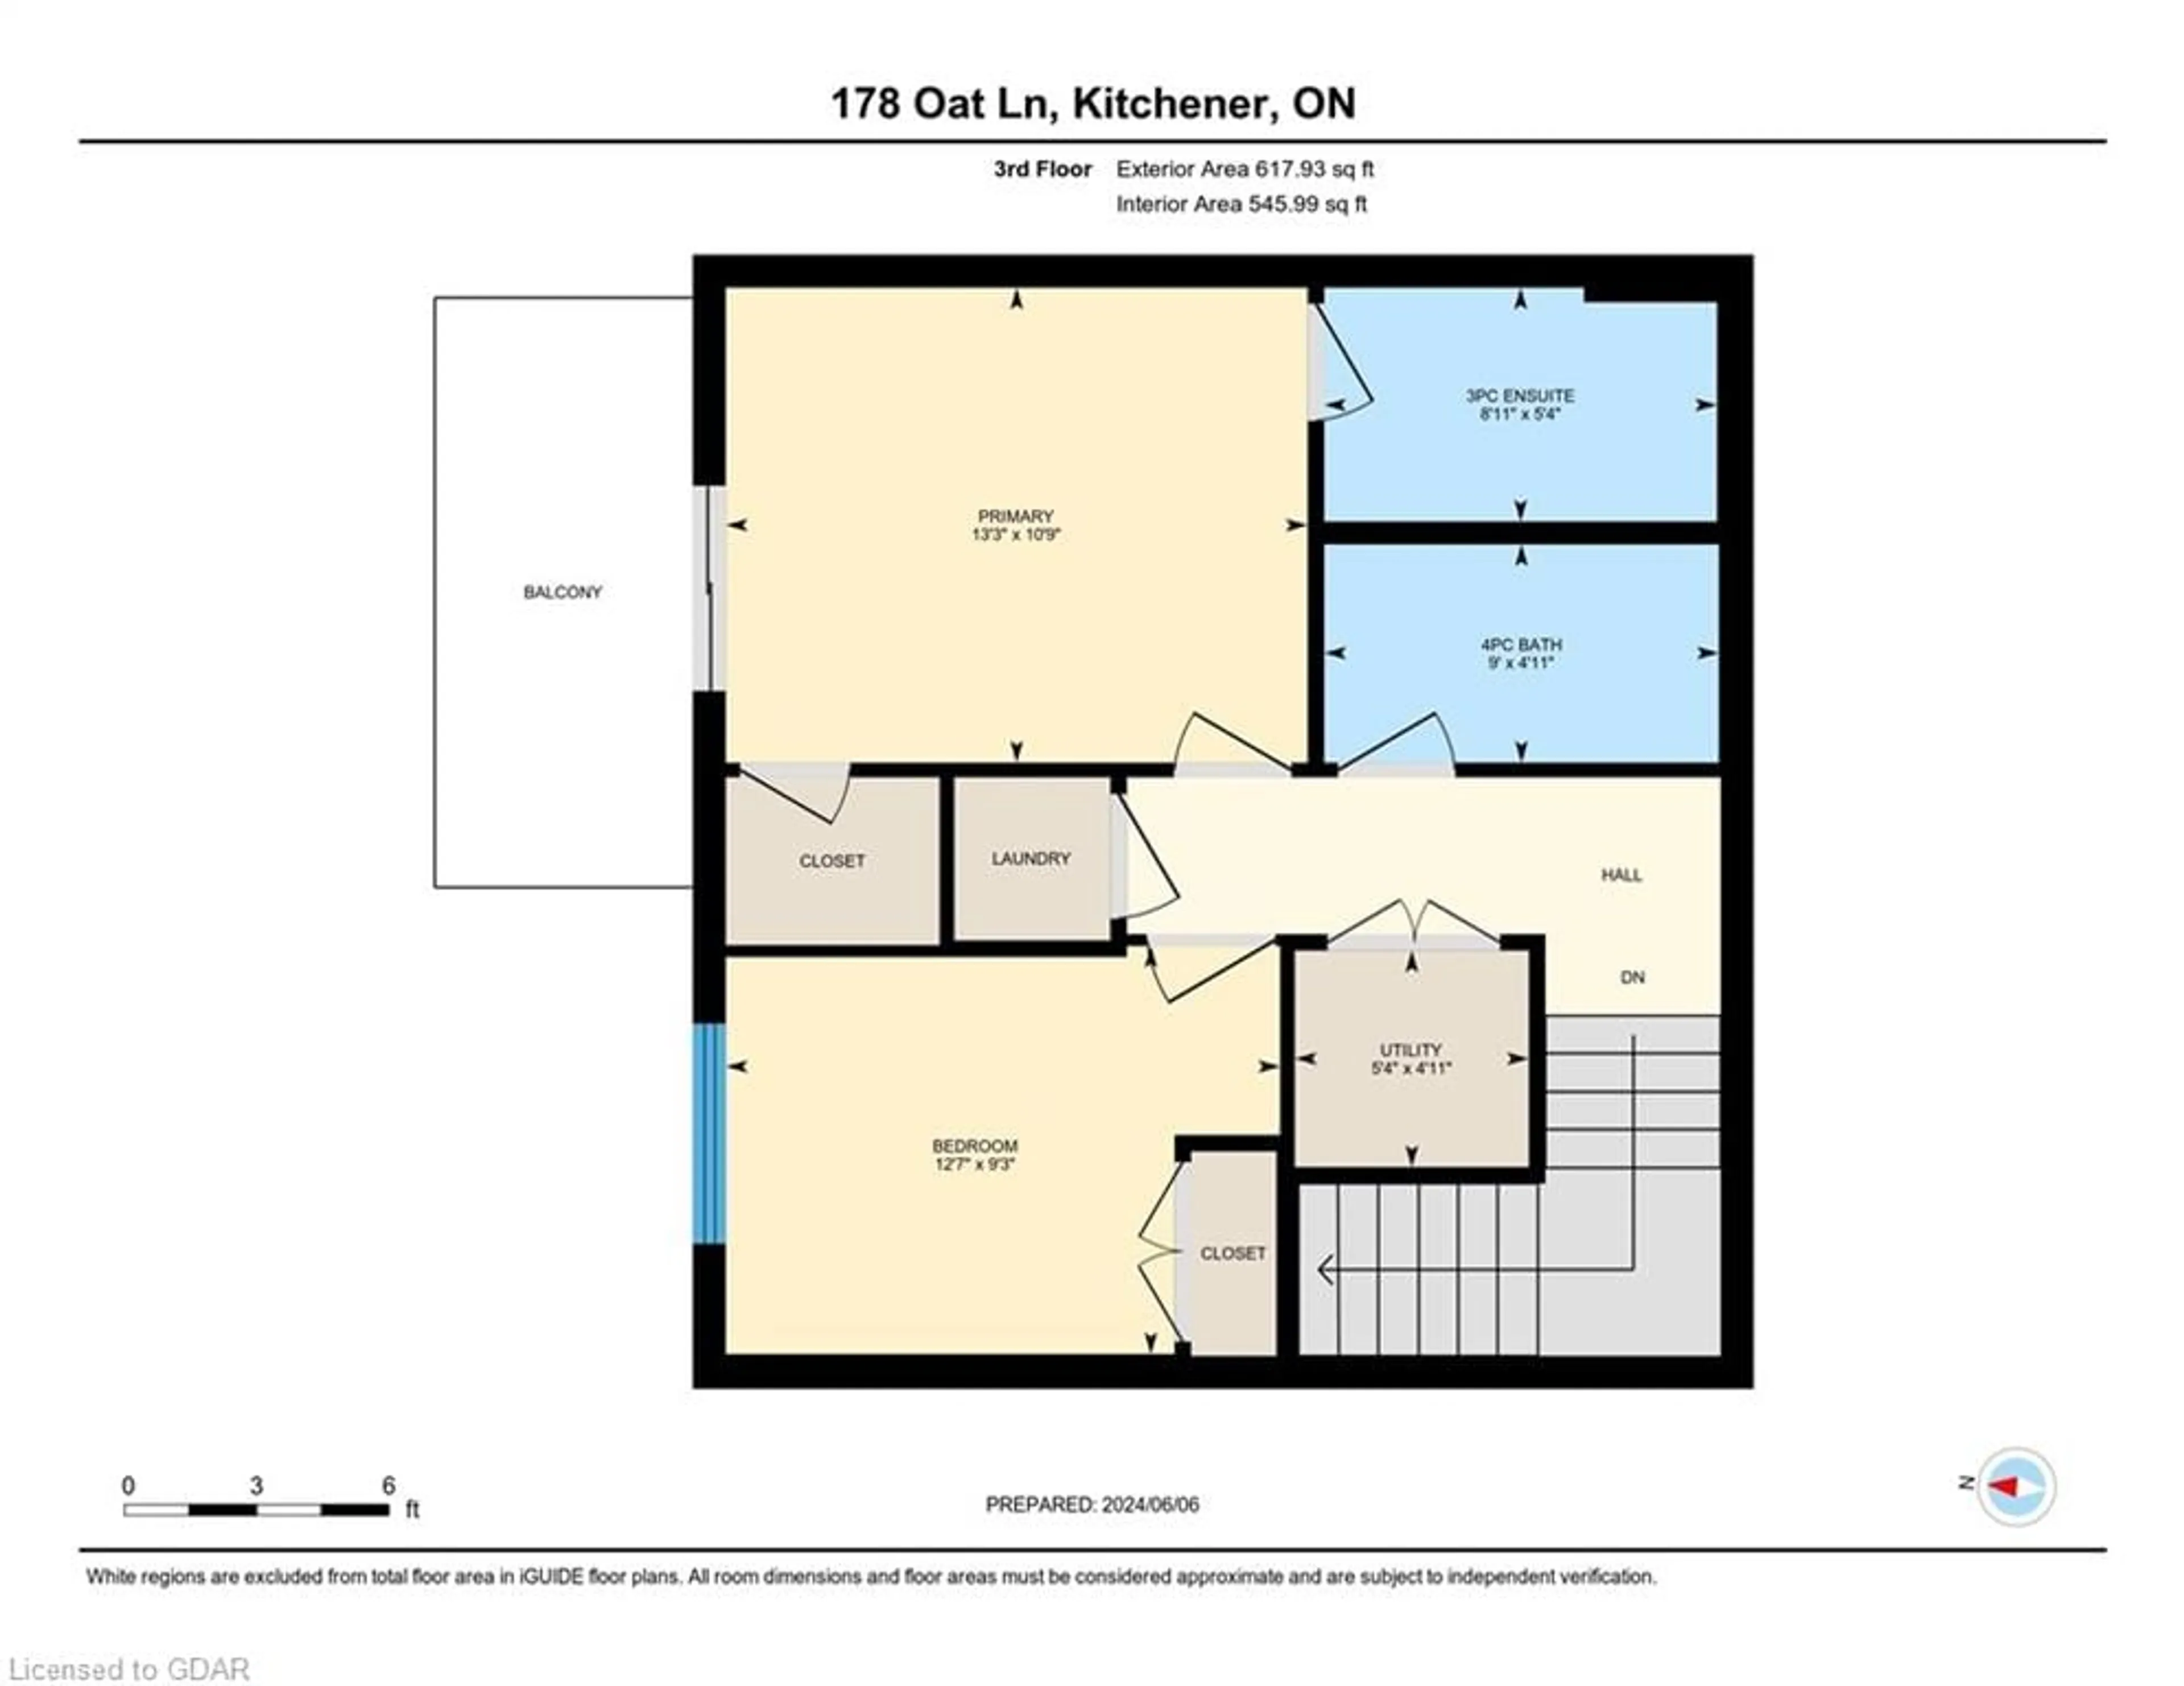 Floor plan for 178 Oat Lane, Kitchener Ontario N2R 0S8